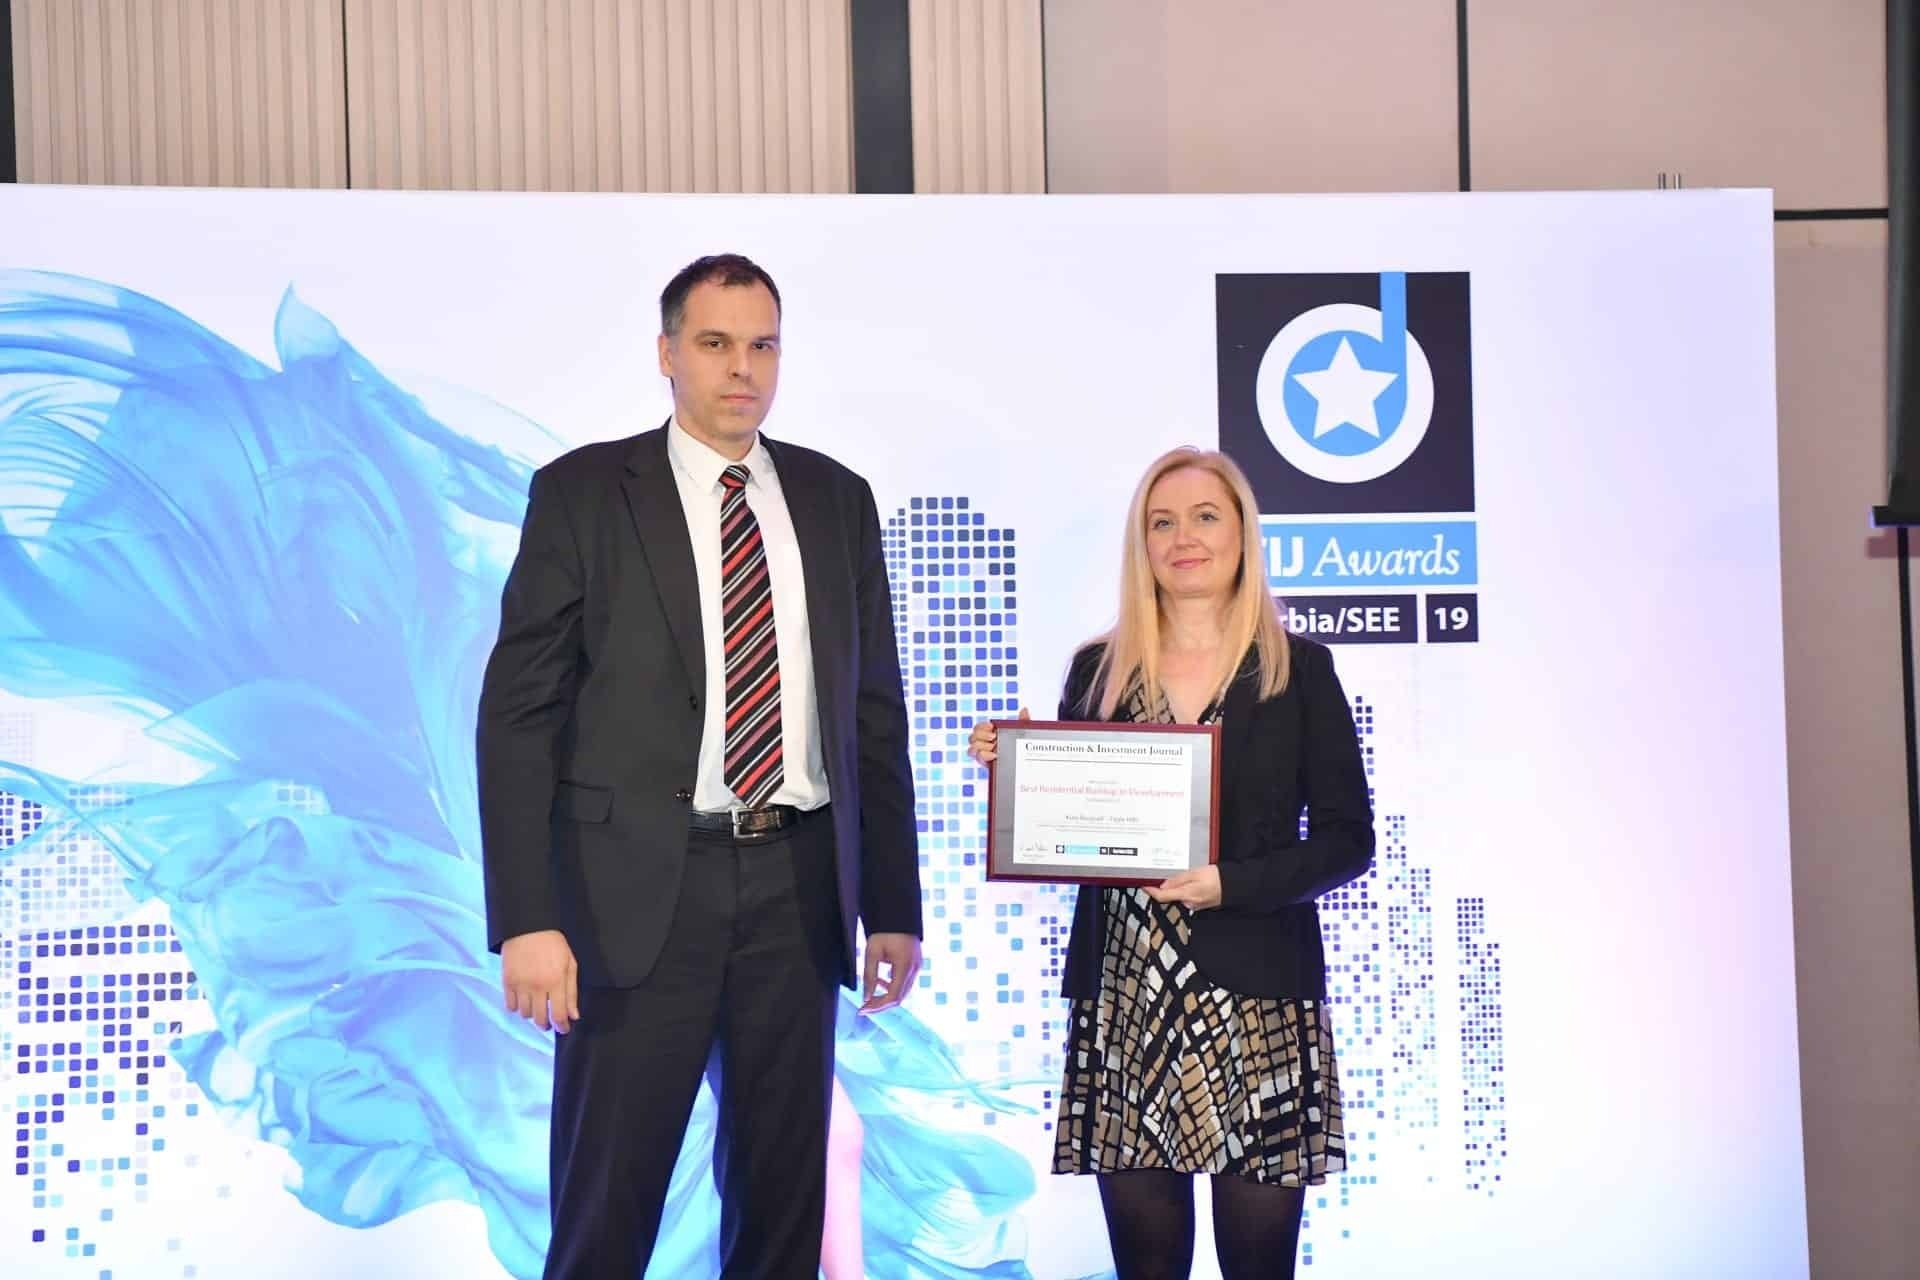 Belgrade Waterfront Is The Winner Of The Prestigious CIJ Award